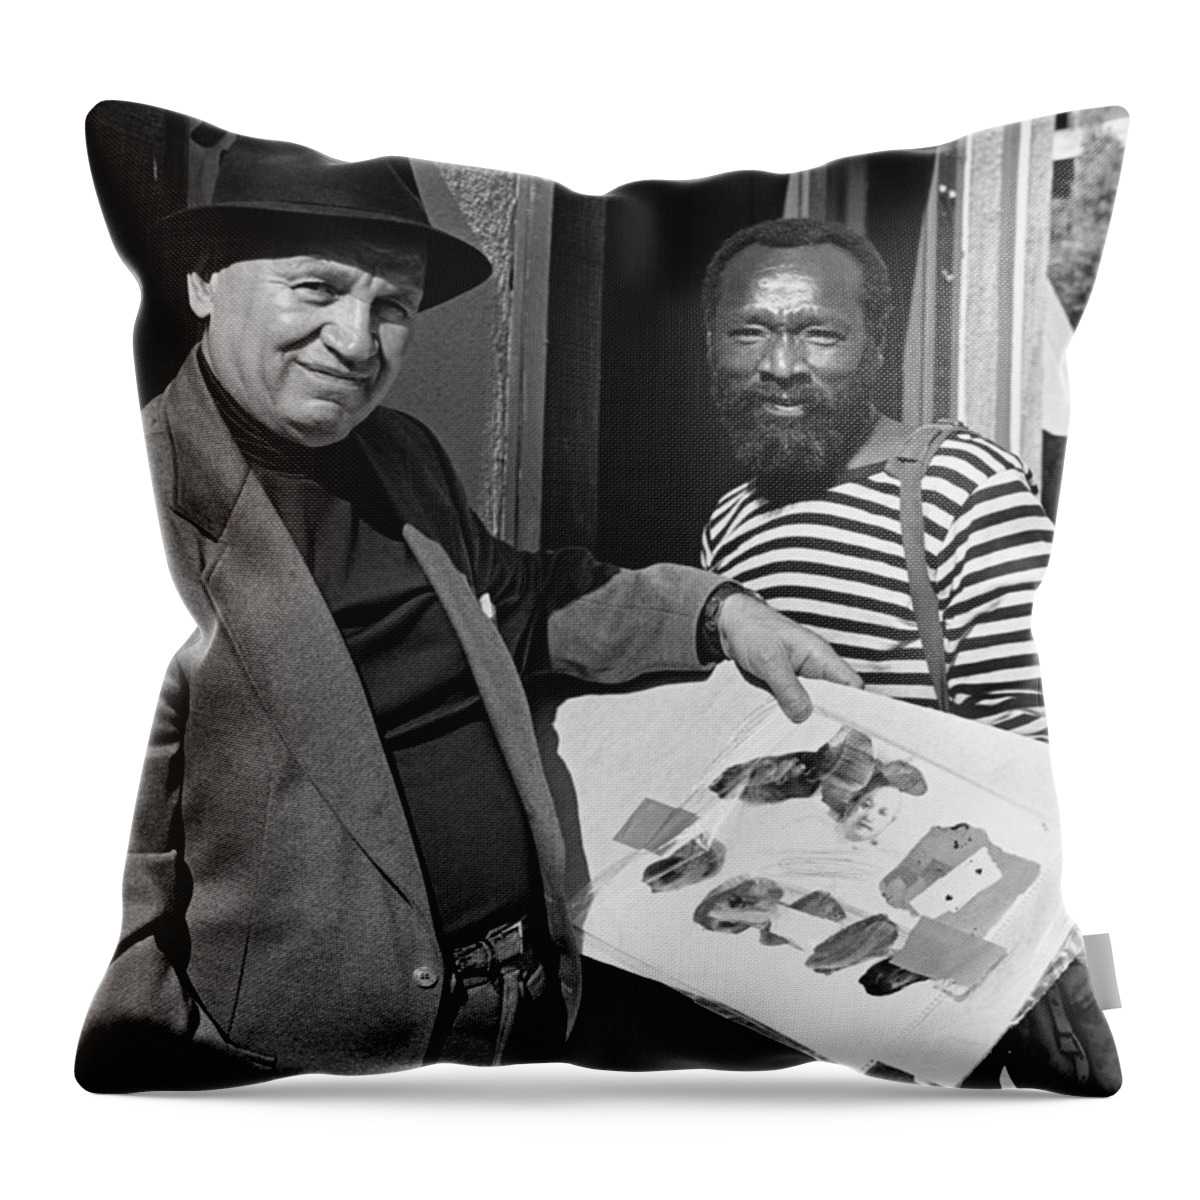 Art Throw Pillow featuring the photograph Romare Bearden & Raymond Saunders by Kathy Sloane